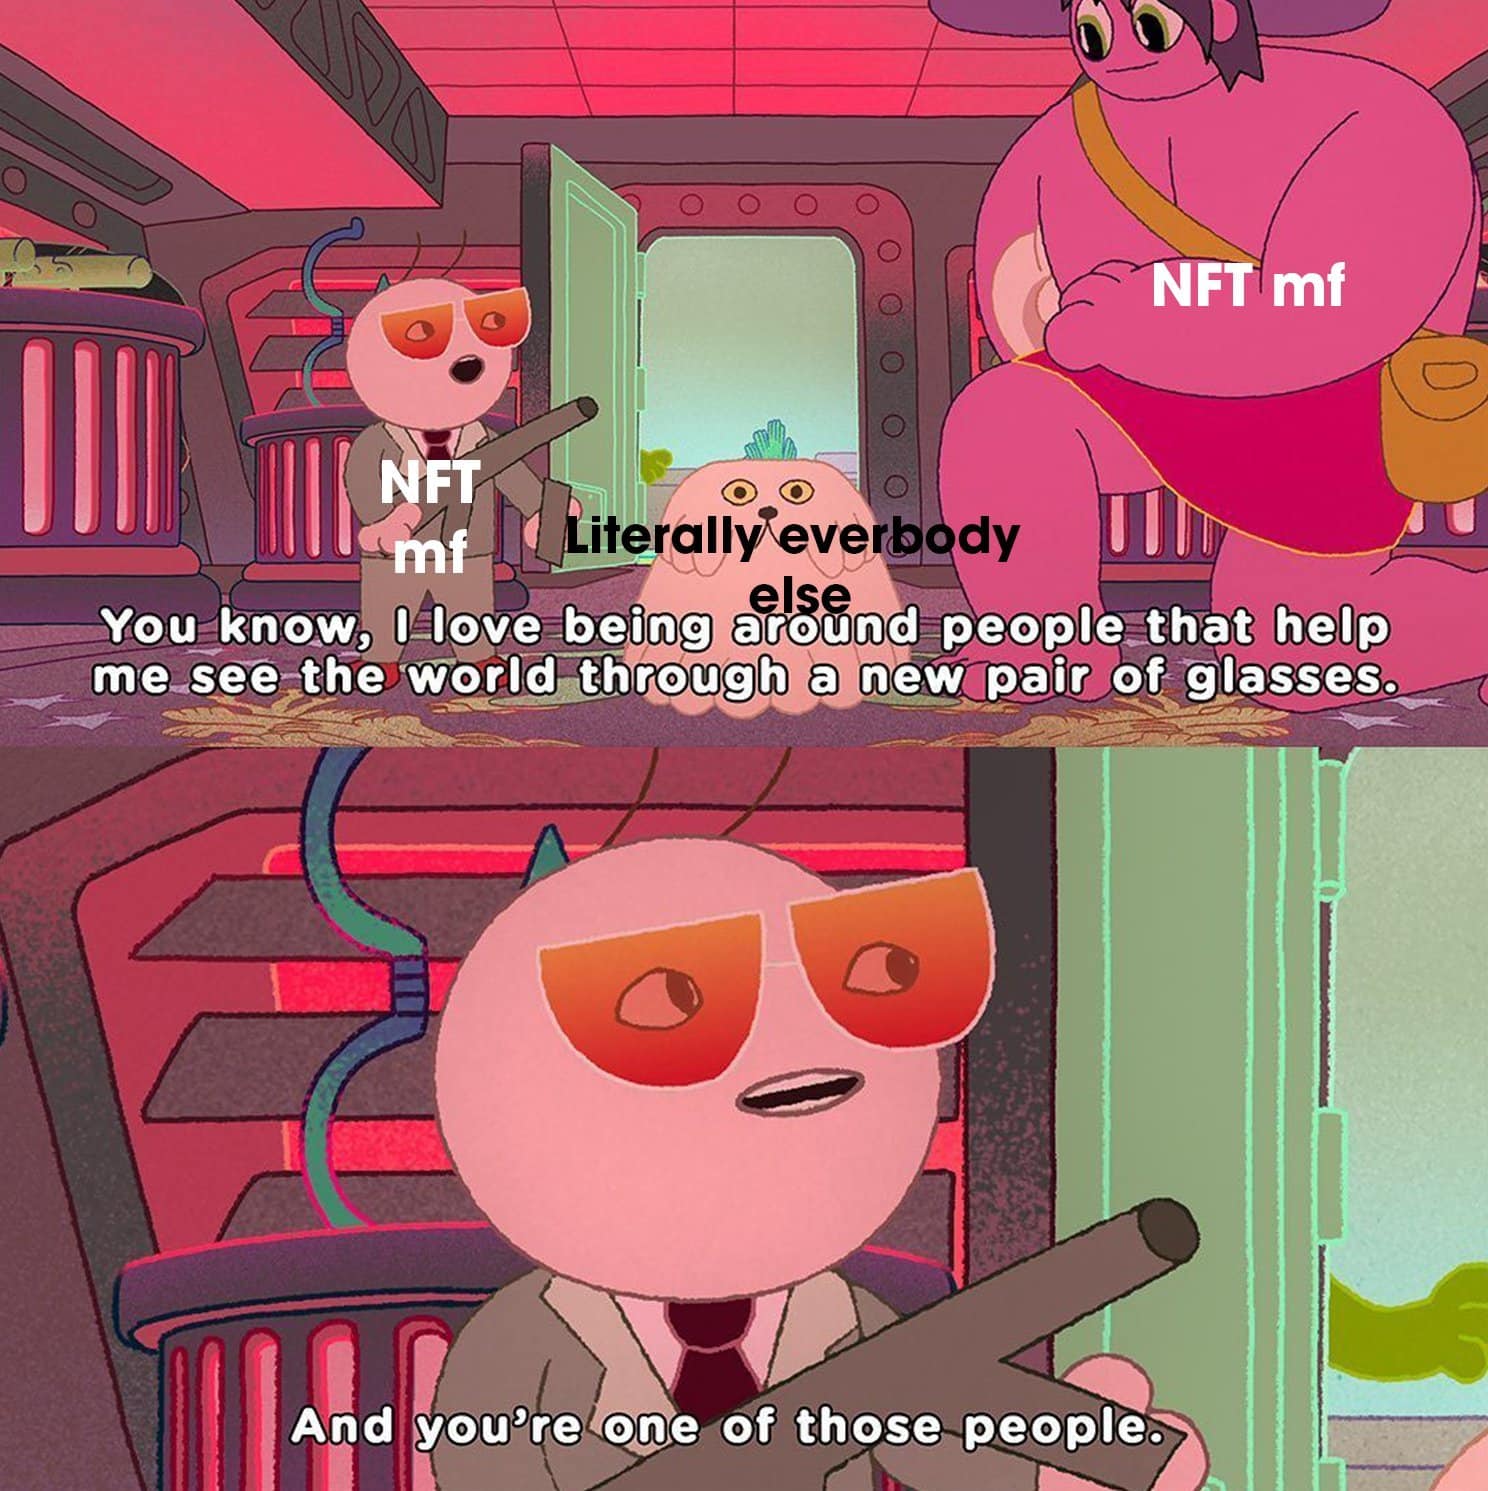 NFT degens vs normal people NFT memes